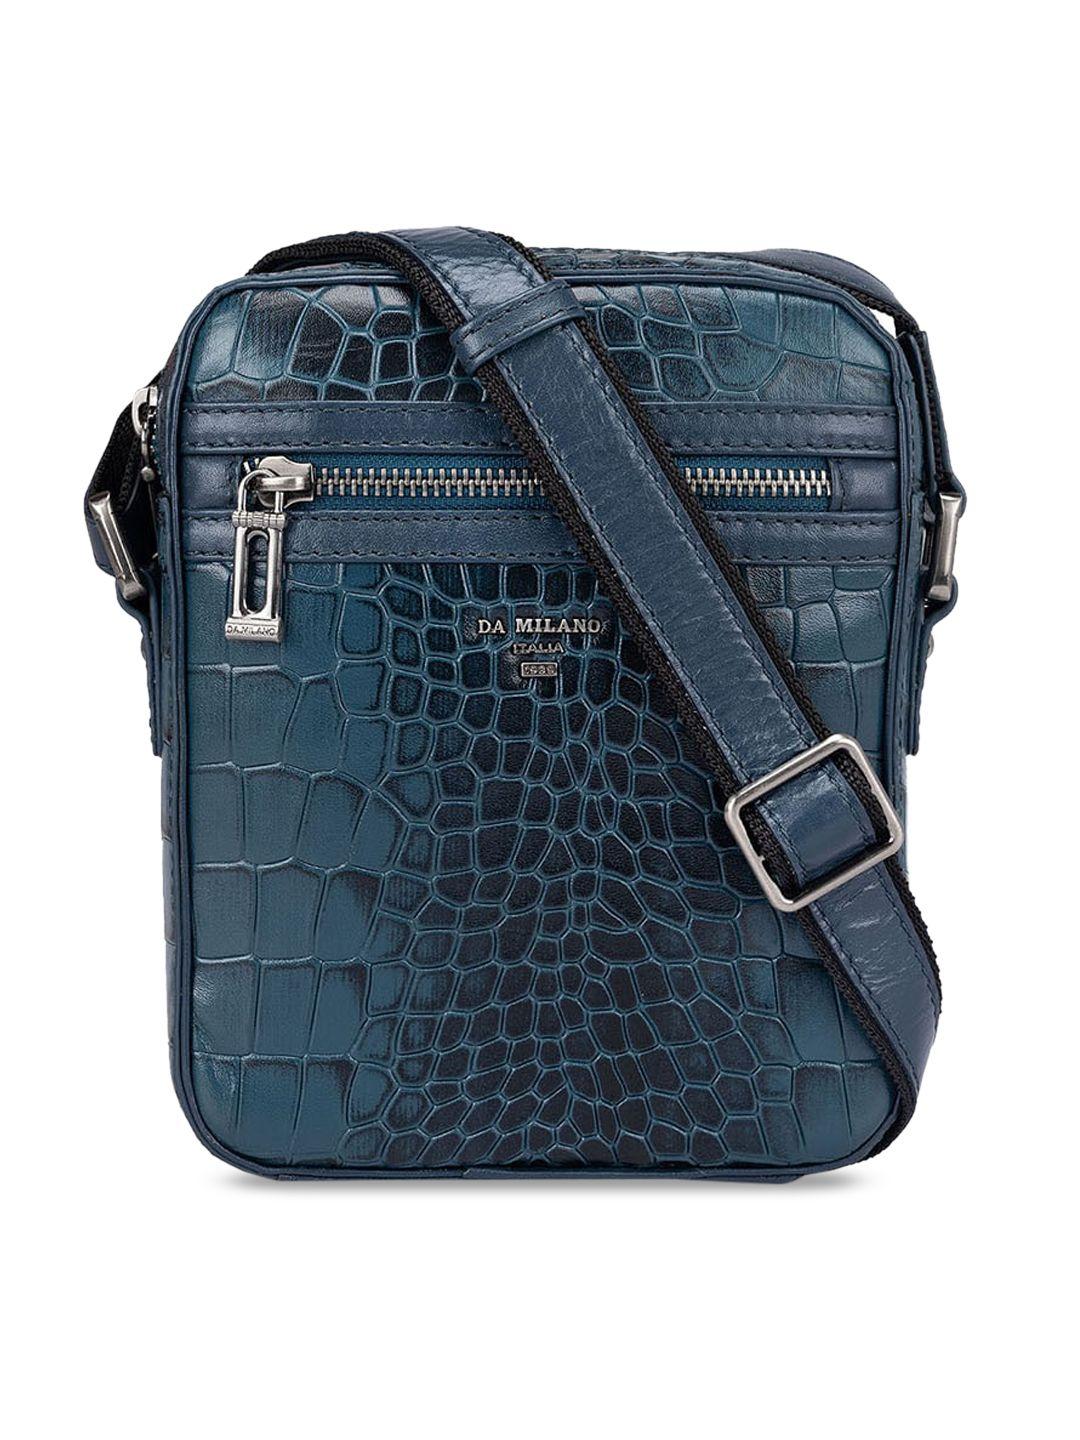 da milano blue leather structured sling bag